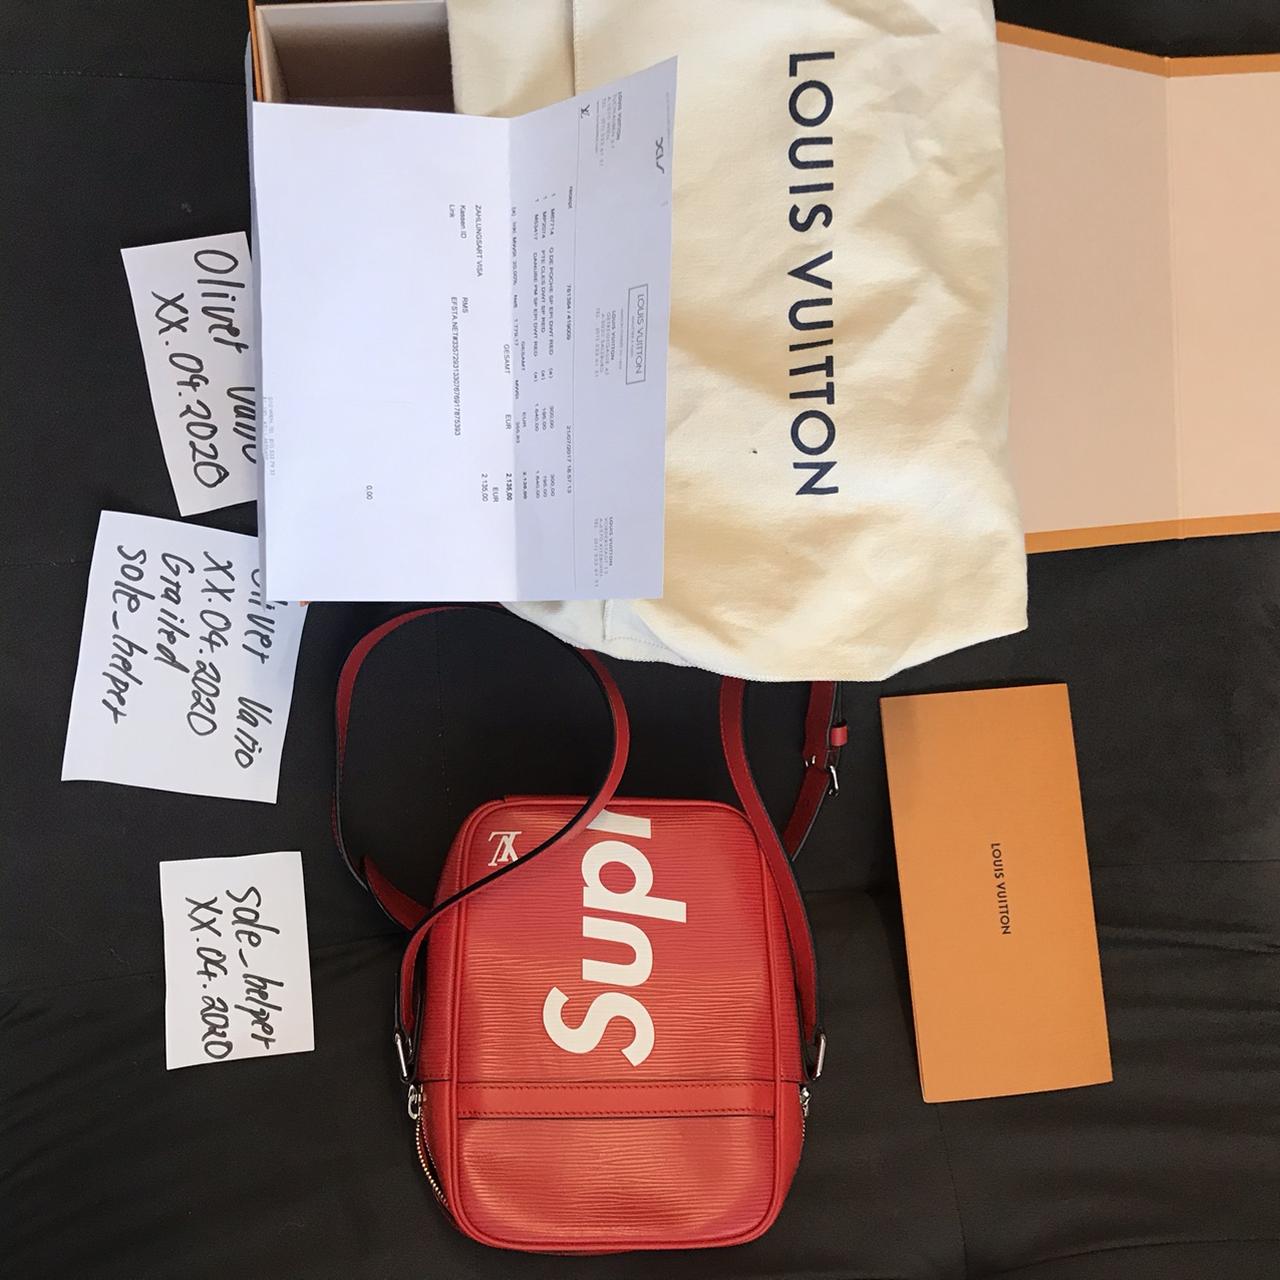 Supreme x Louis Vuitton Epi Bag Danube Red With box, - Depop